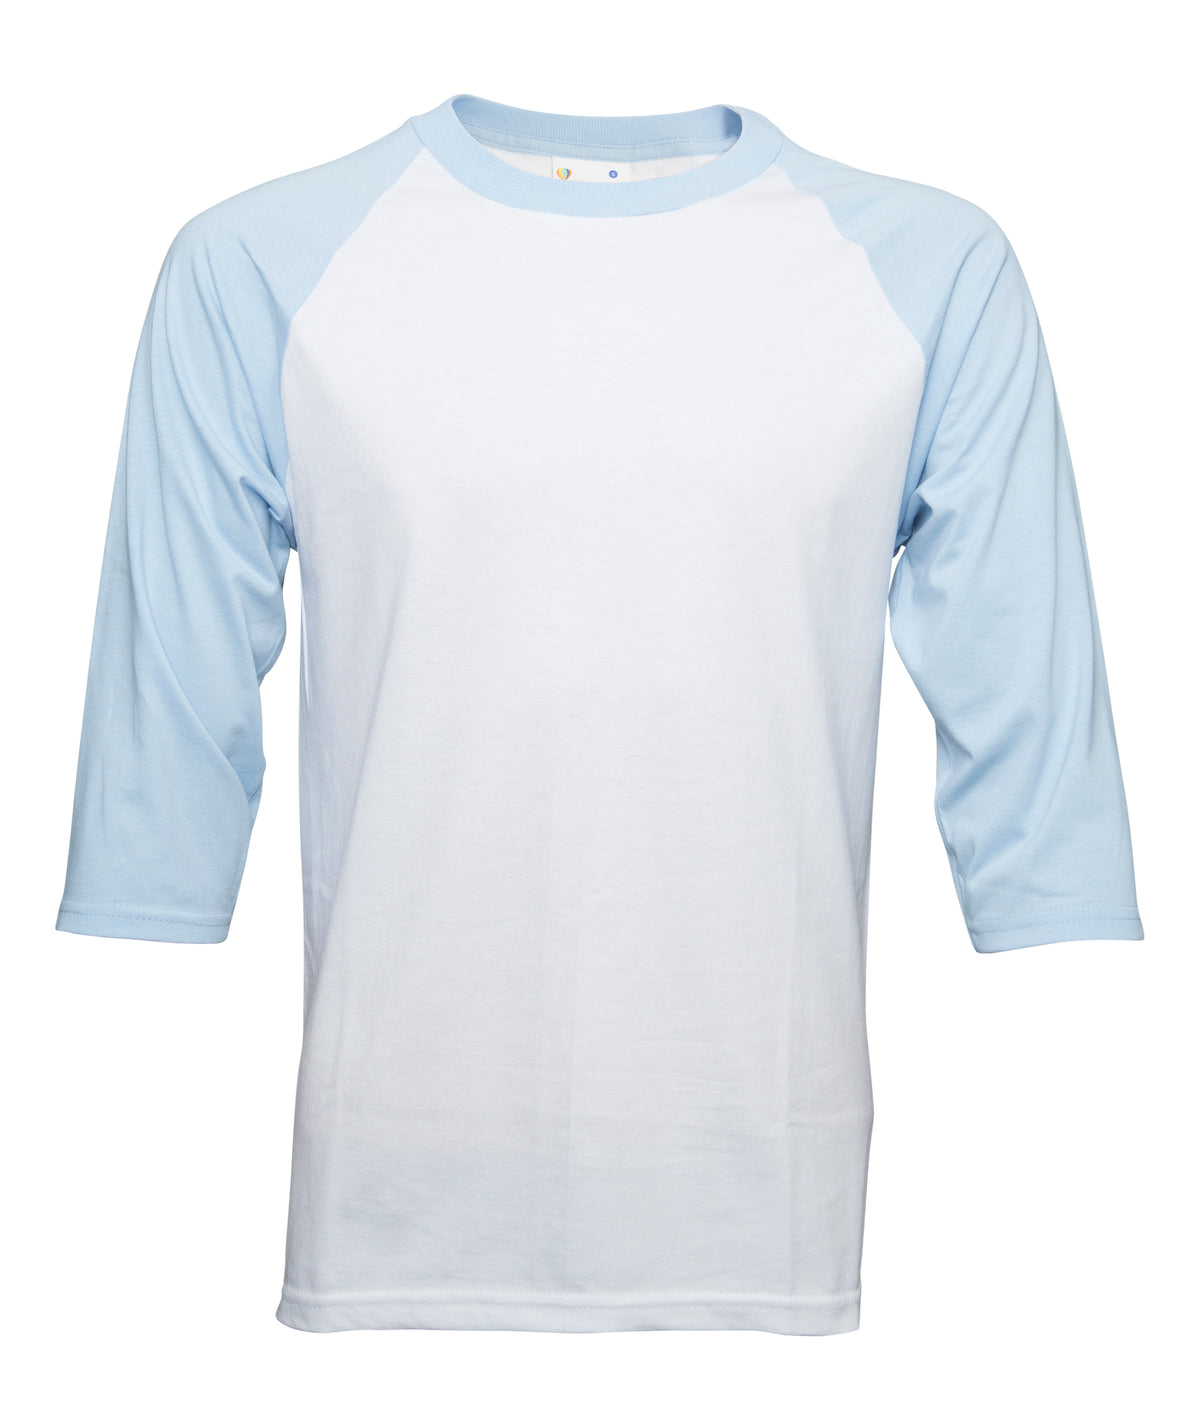 MindsparkCreative Charlotte Orioles Long Sleeve T-Shirt